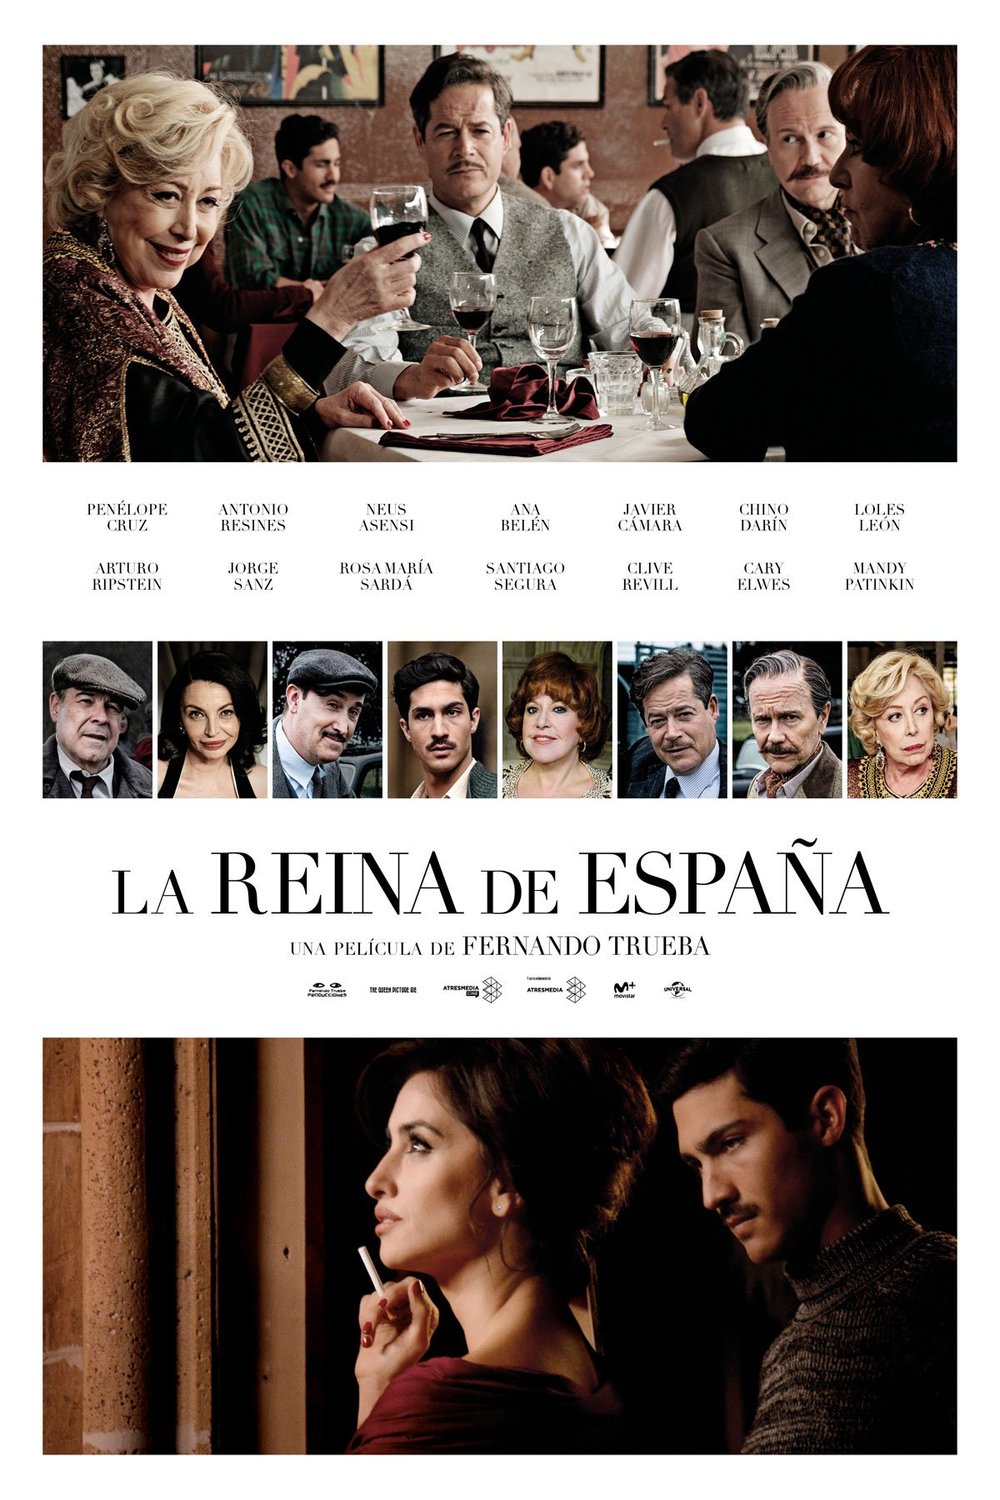 L'affiche originale du film La reina de España en espagnol